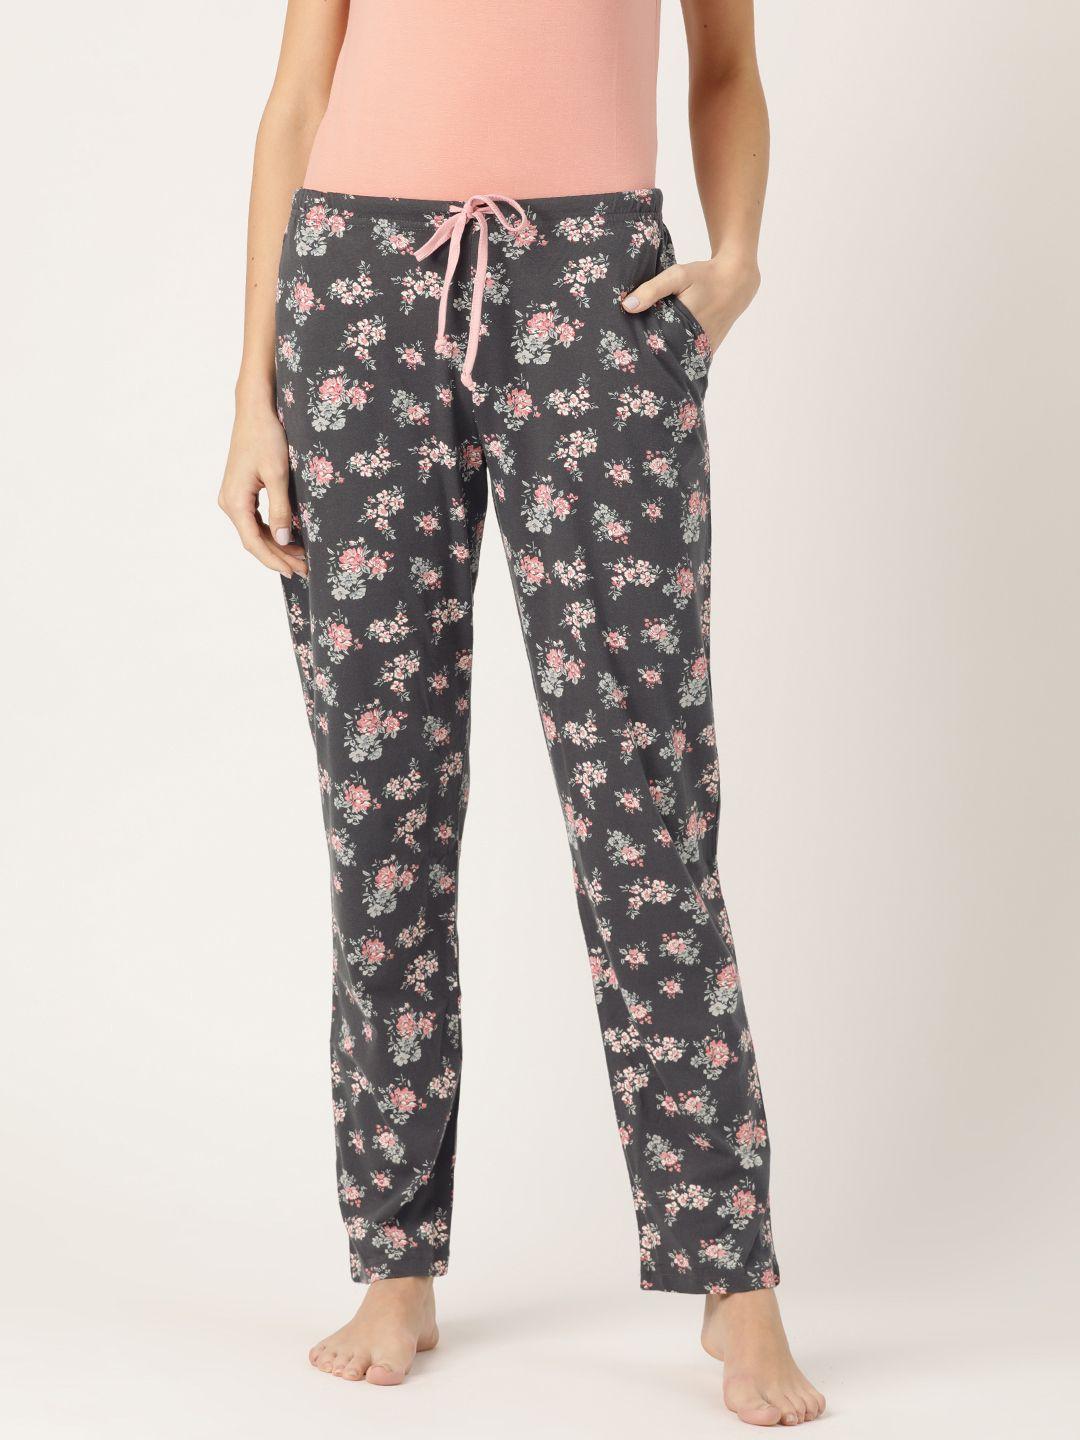 kanvin-women-charcoal-grey-&-pink-floral-print-lounge-pants